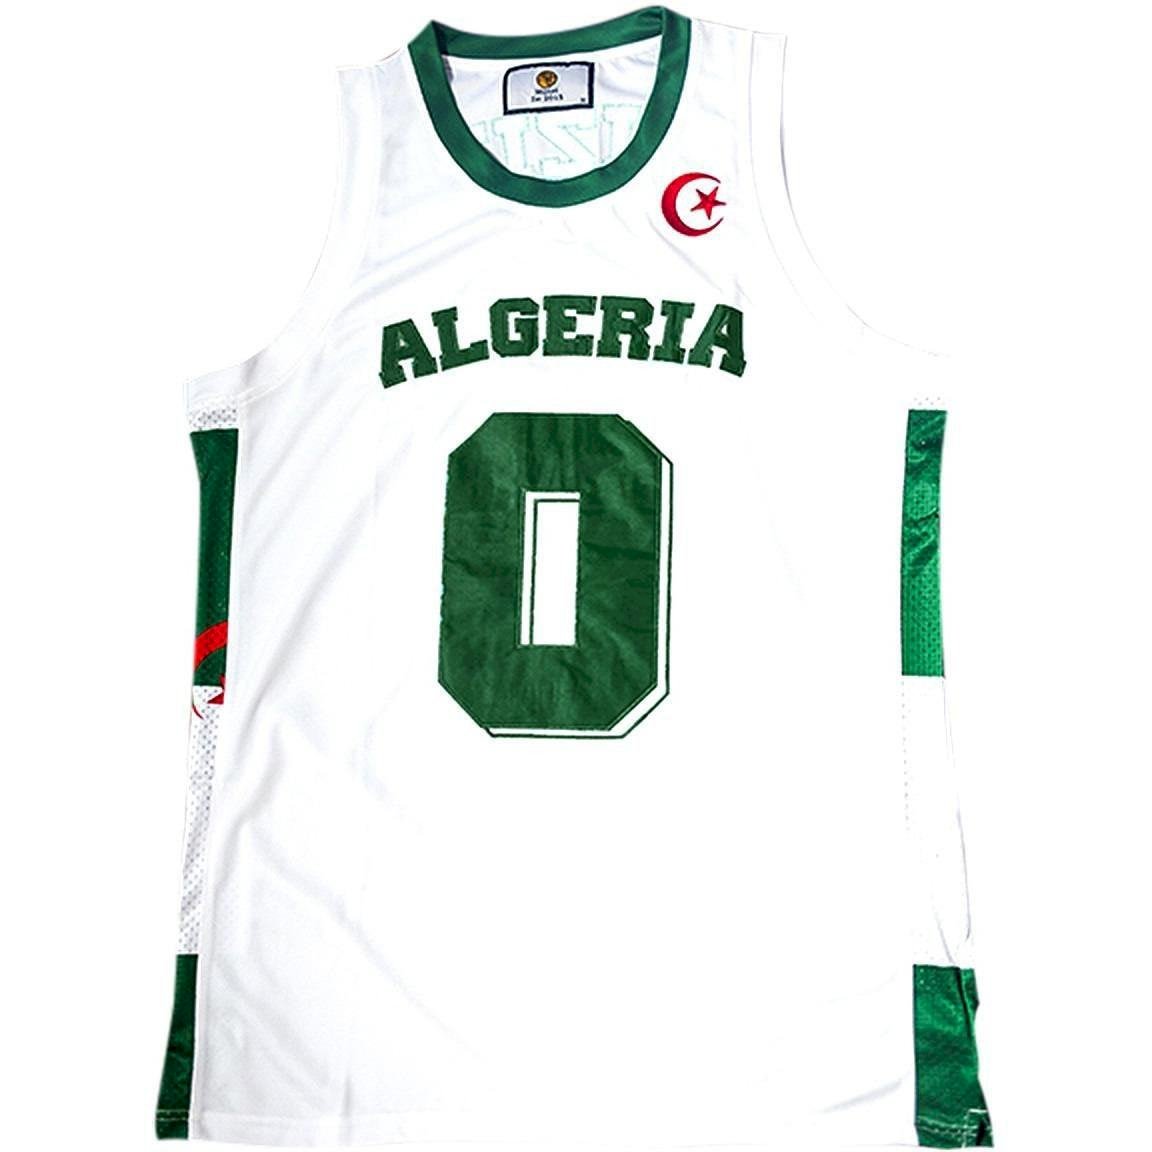 Algeria Basketball Jersey - JerseyAve - Marketplace